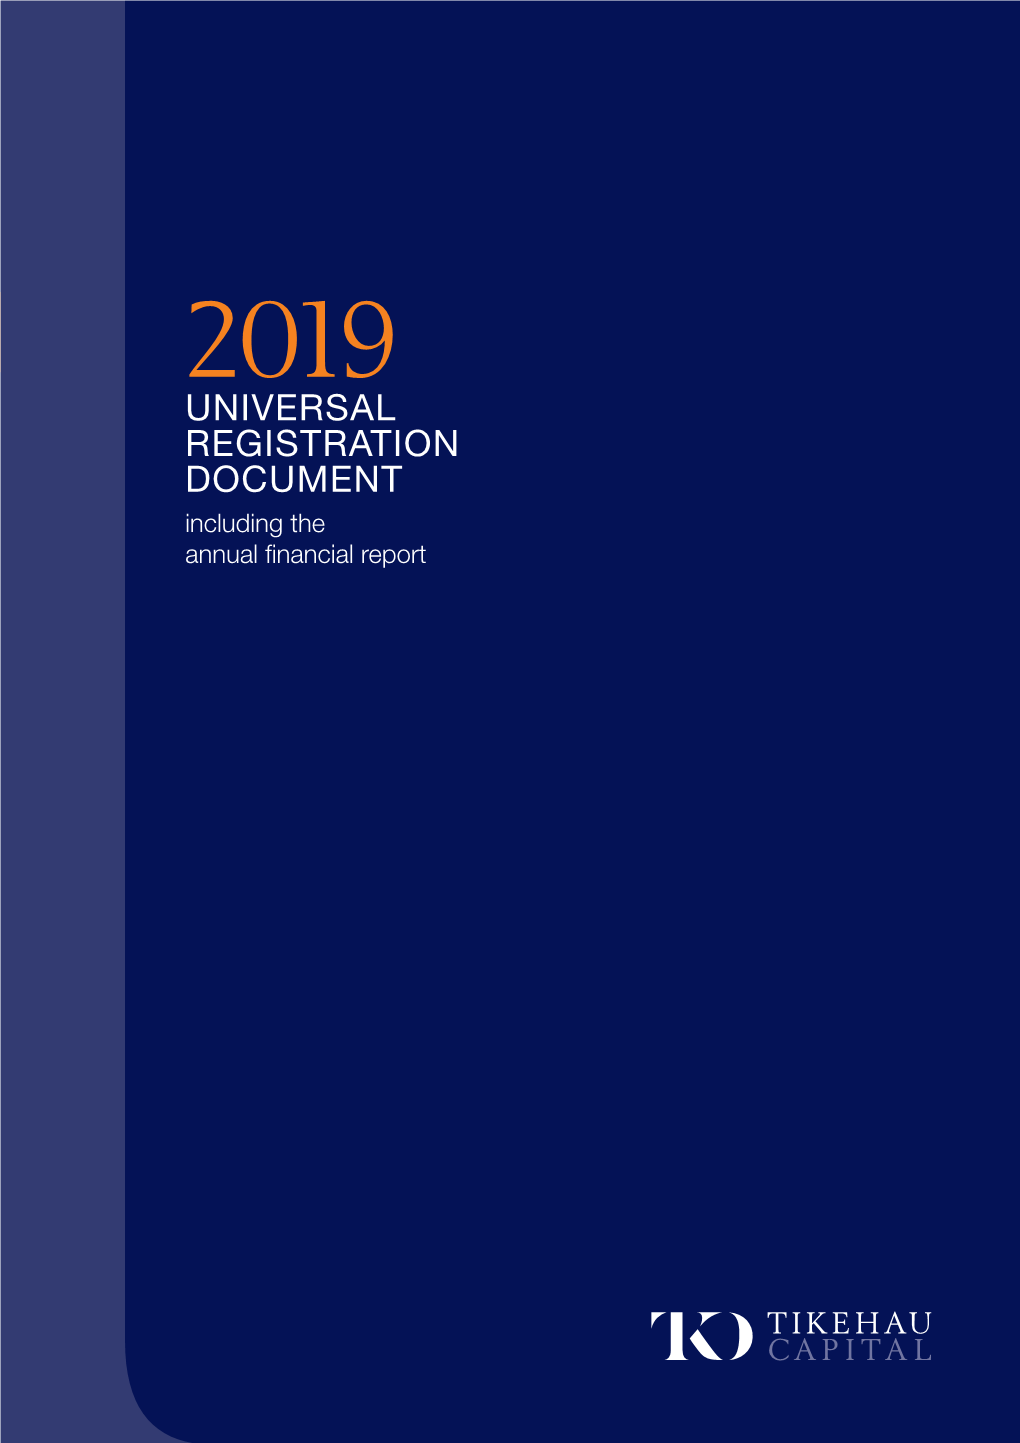 TIKEHAU CAPITAL 2019 UNIVERSAL REGISTRATION DOCUMENT 2019 UNIVERSAL REGISTRATION DOCUMENT Including the Annual Financial Report